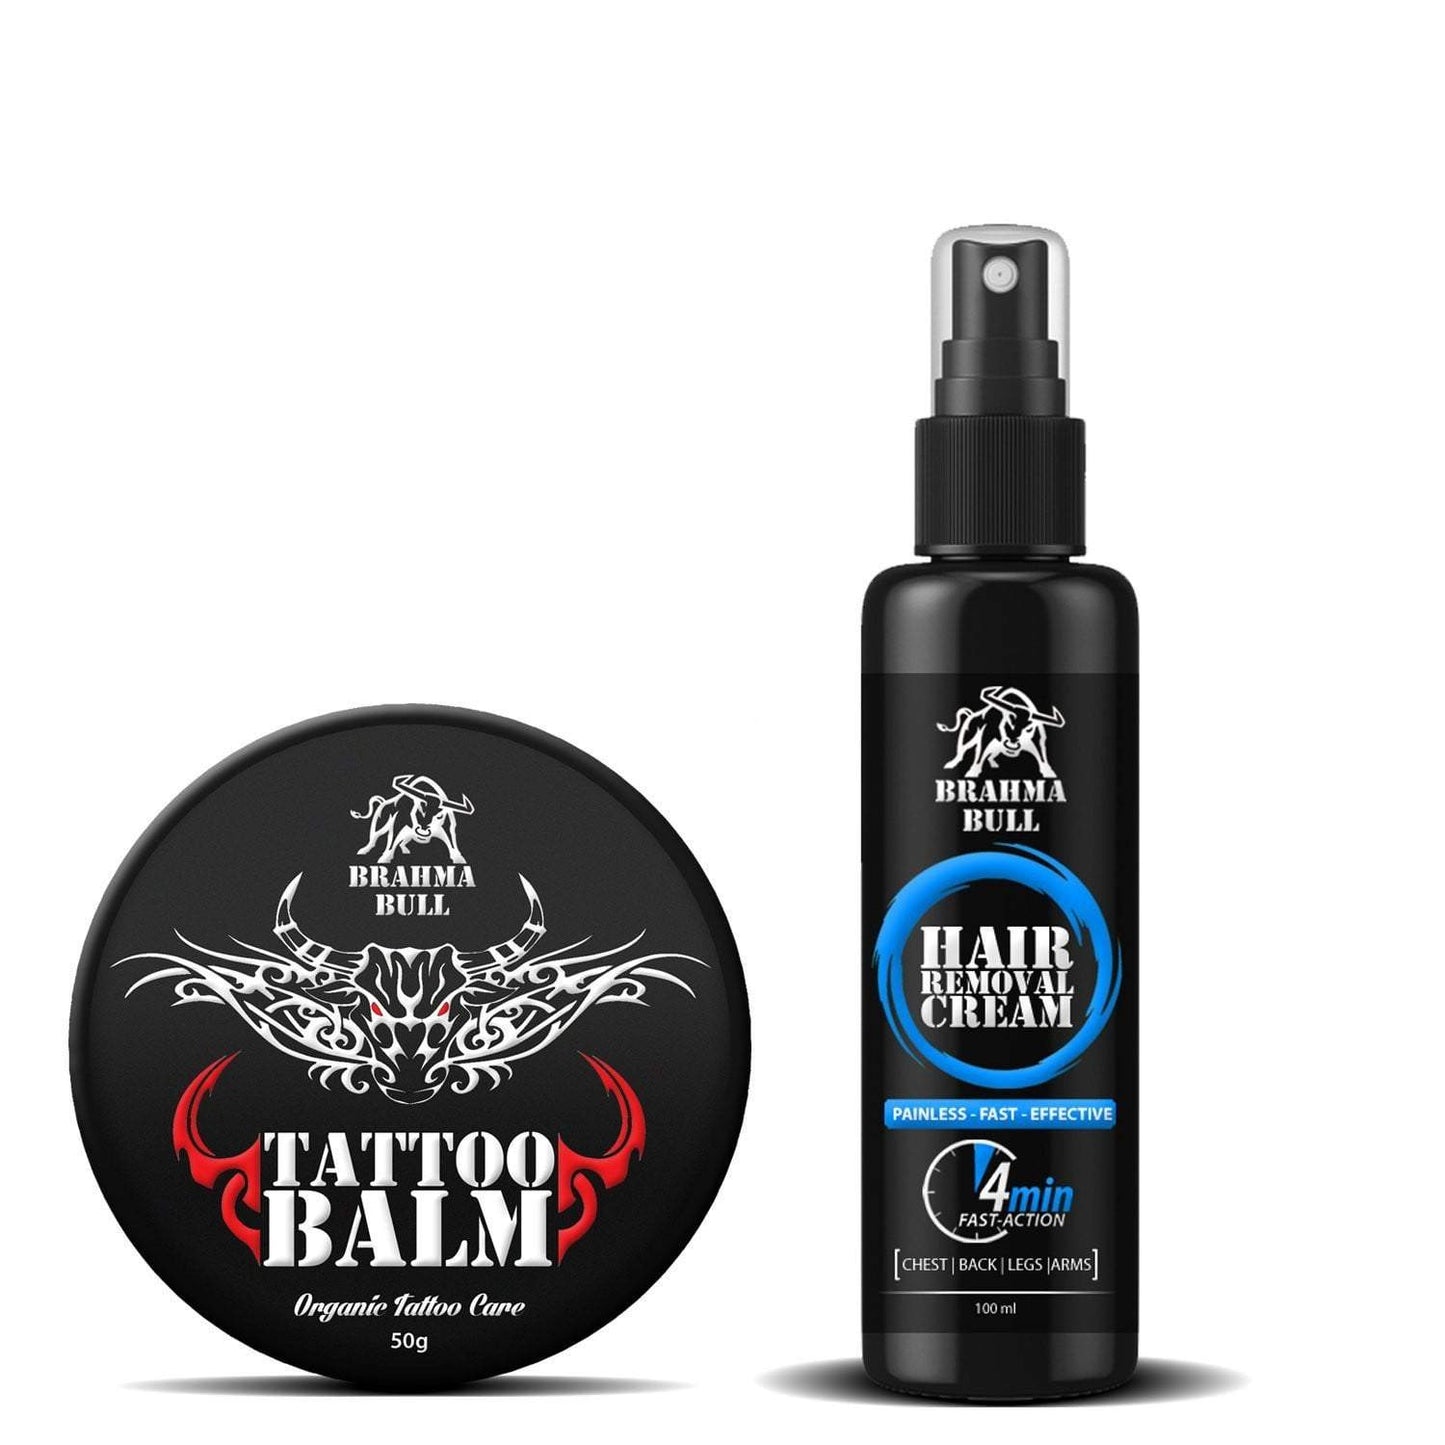 Hair Removal Cream & Tattoo Balm - Brahma Bull - Men's Grooming